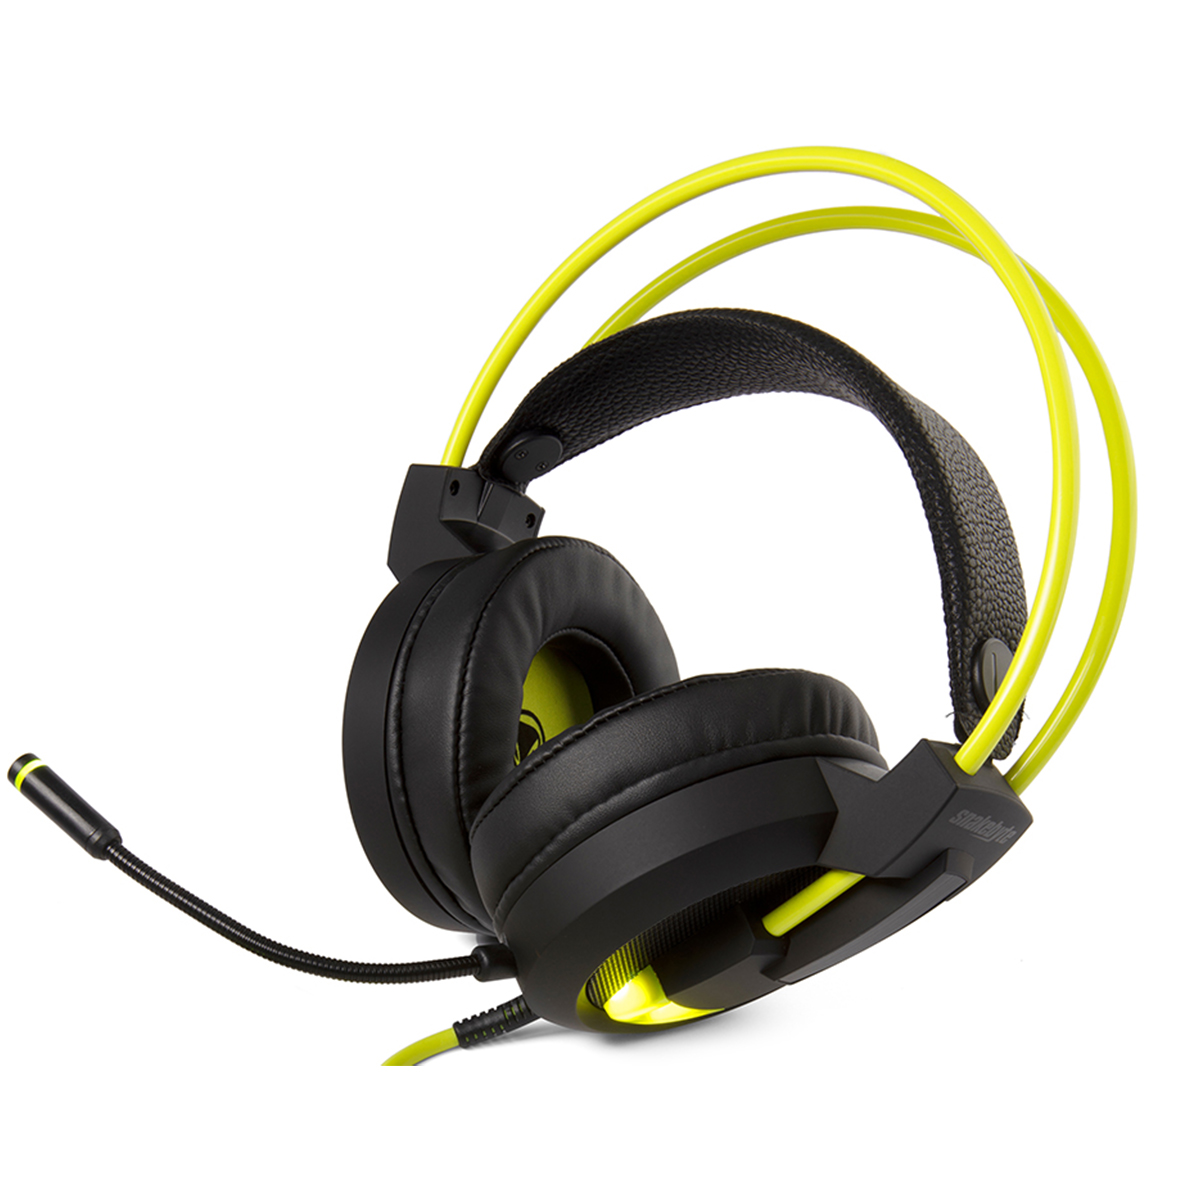 Schwarz-Gelb Gaming-Headset SNAKEBYTE Head:Set PRO™, Over-ear